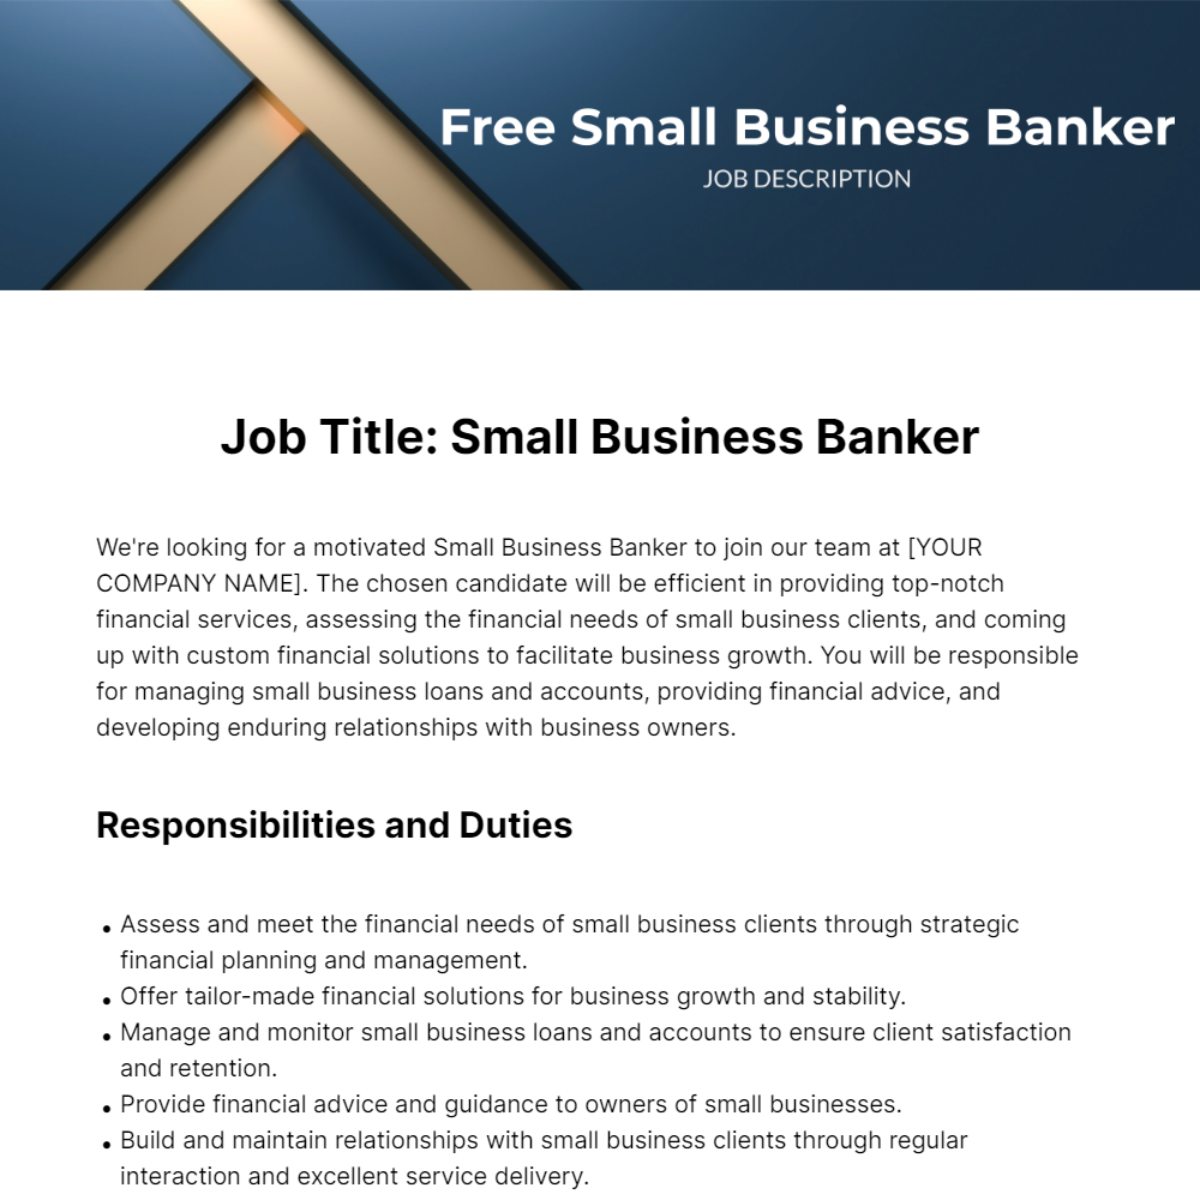 Small Business Banker Job Description Template